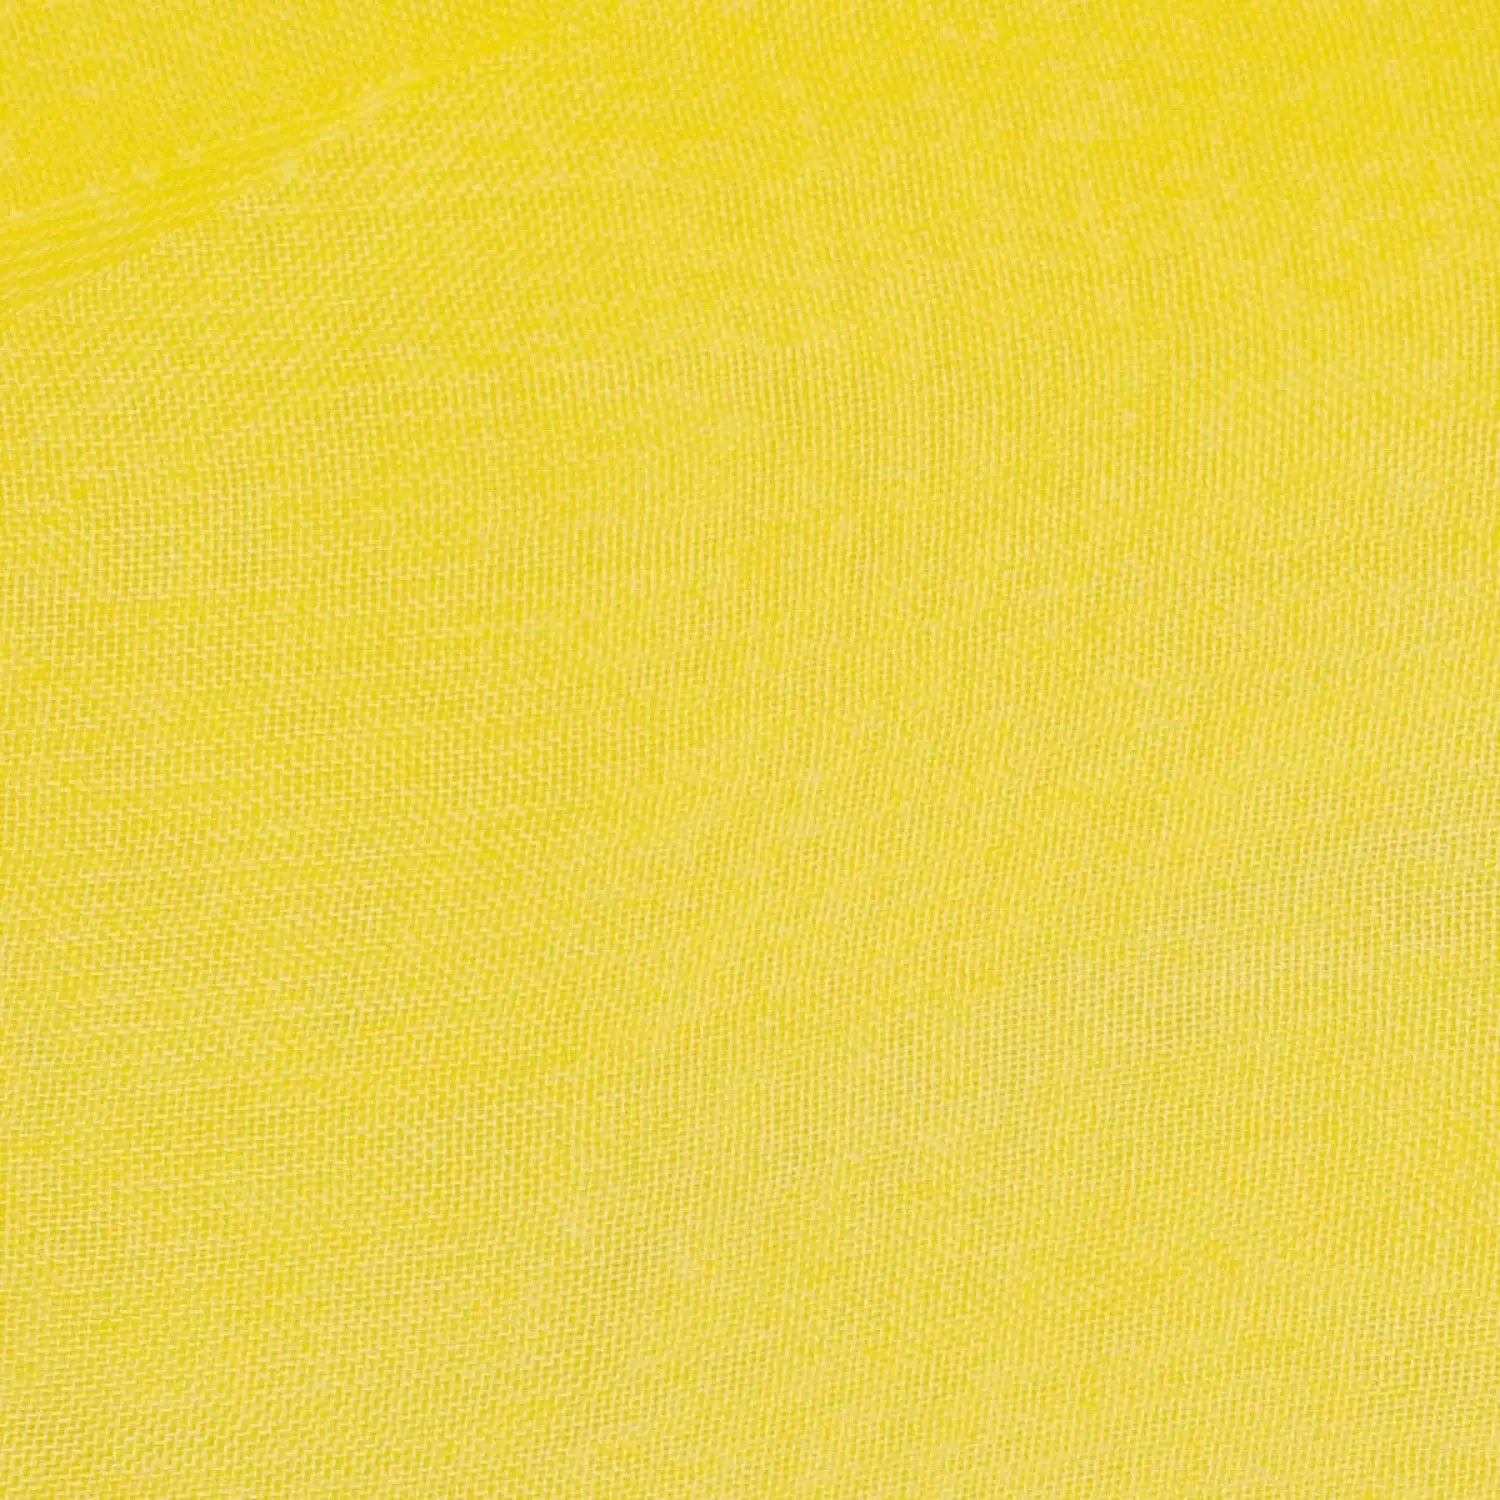 Yellow chiffon scarf fabric background for SALE Classic Plain Chiffon Scarf